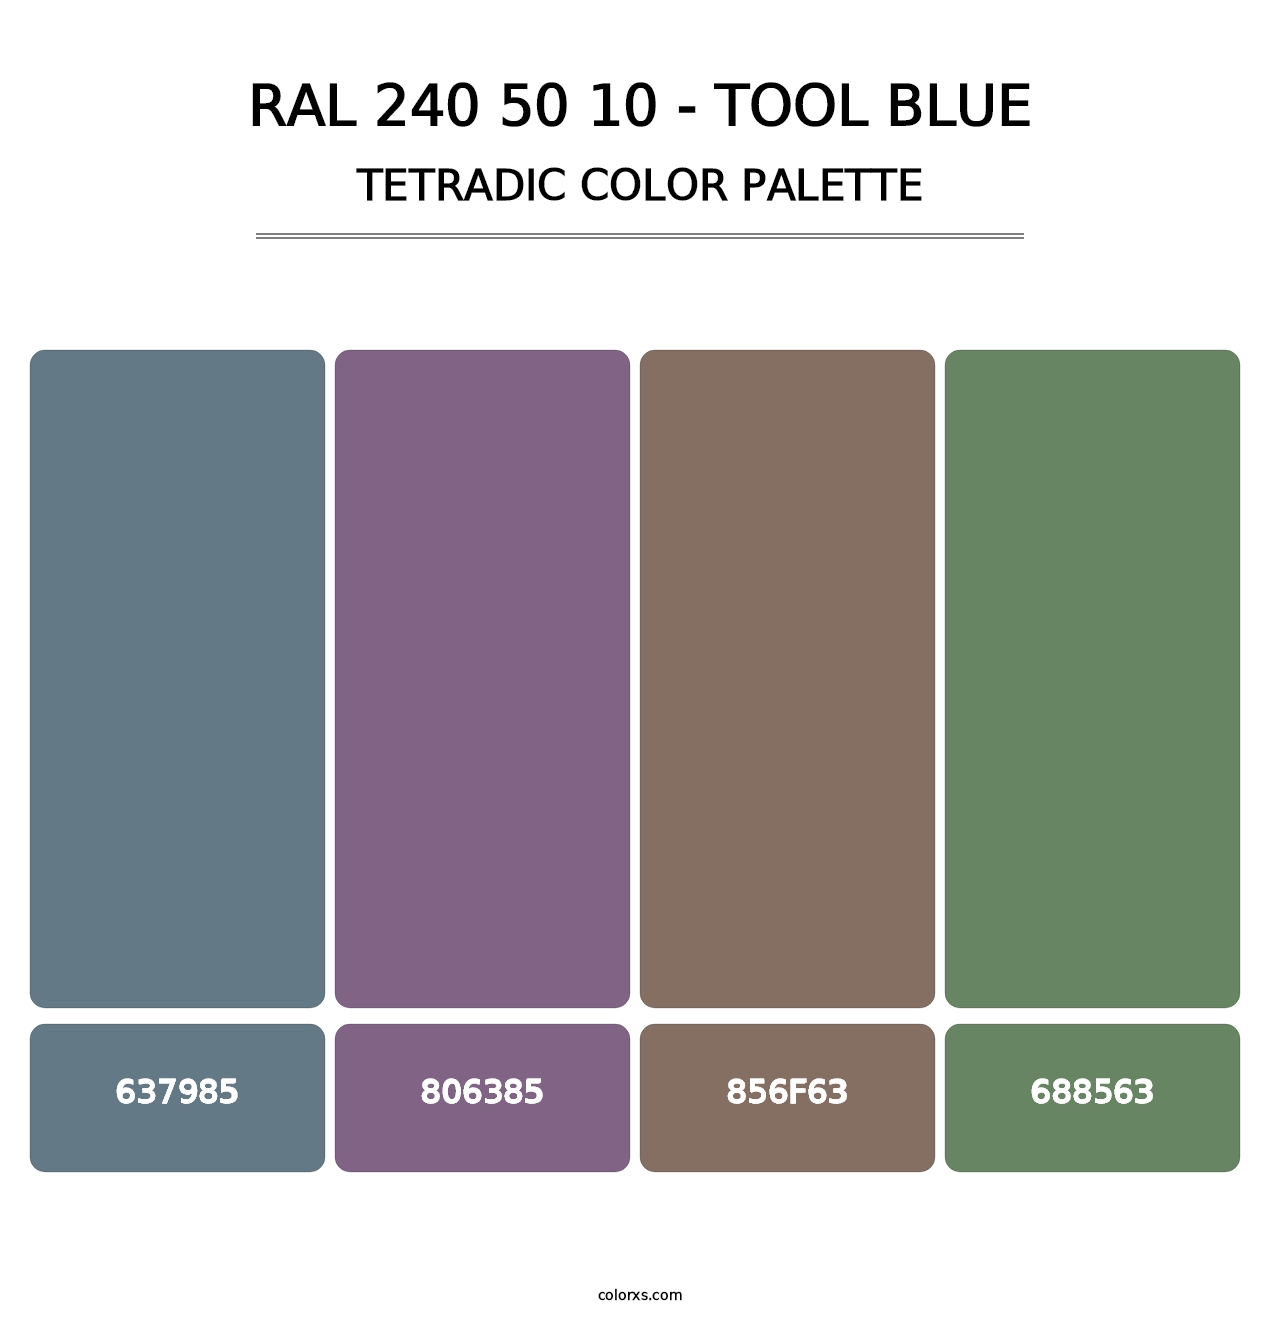 RAL 240 50 10 - Tool Blue - Tetradic Color Palette